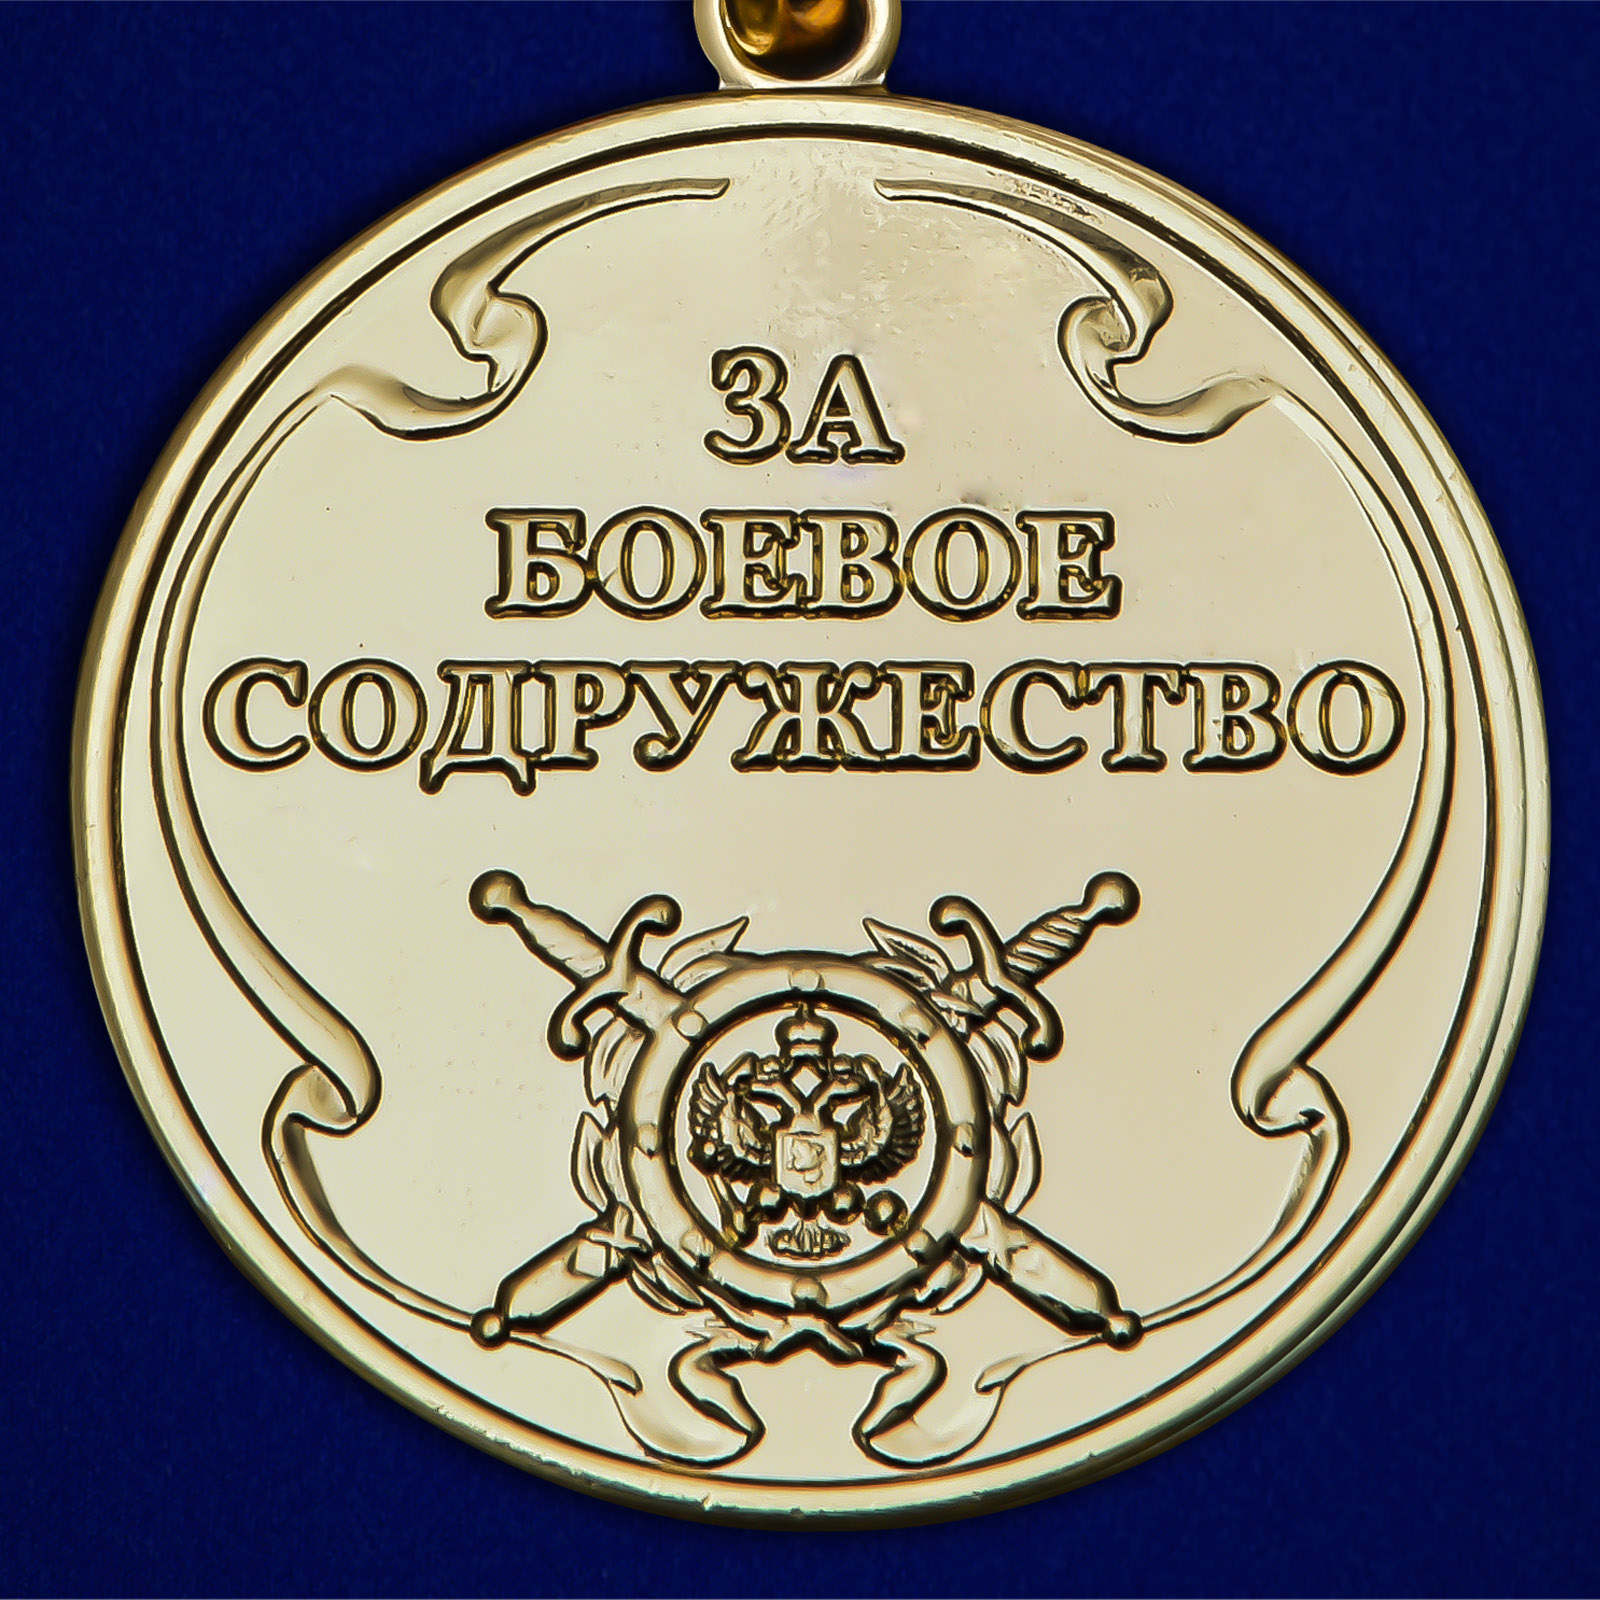 Аверс медали "За боевое содружество" МВД